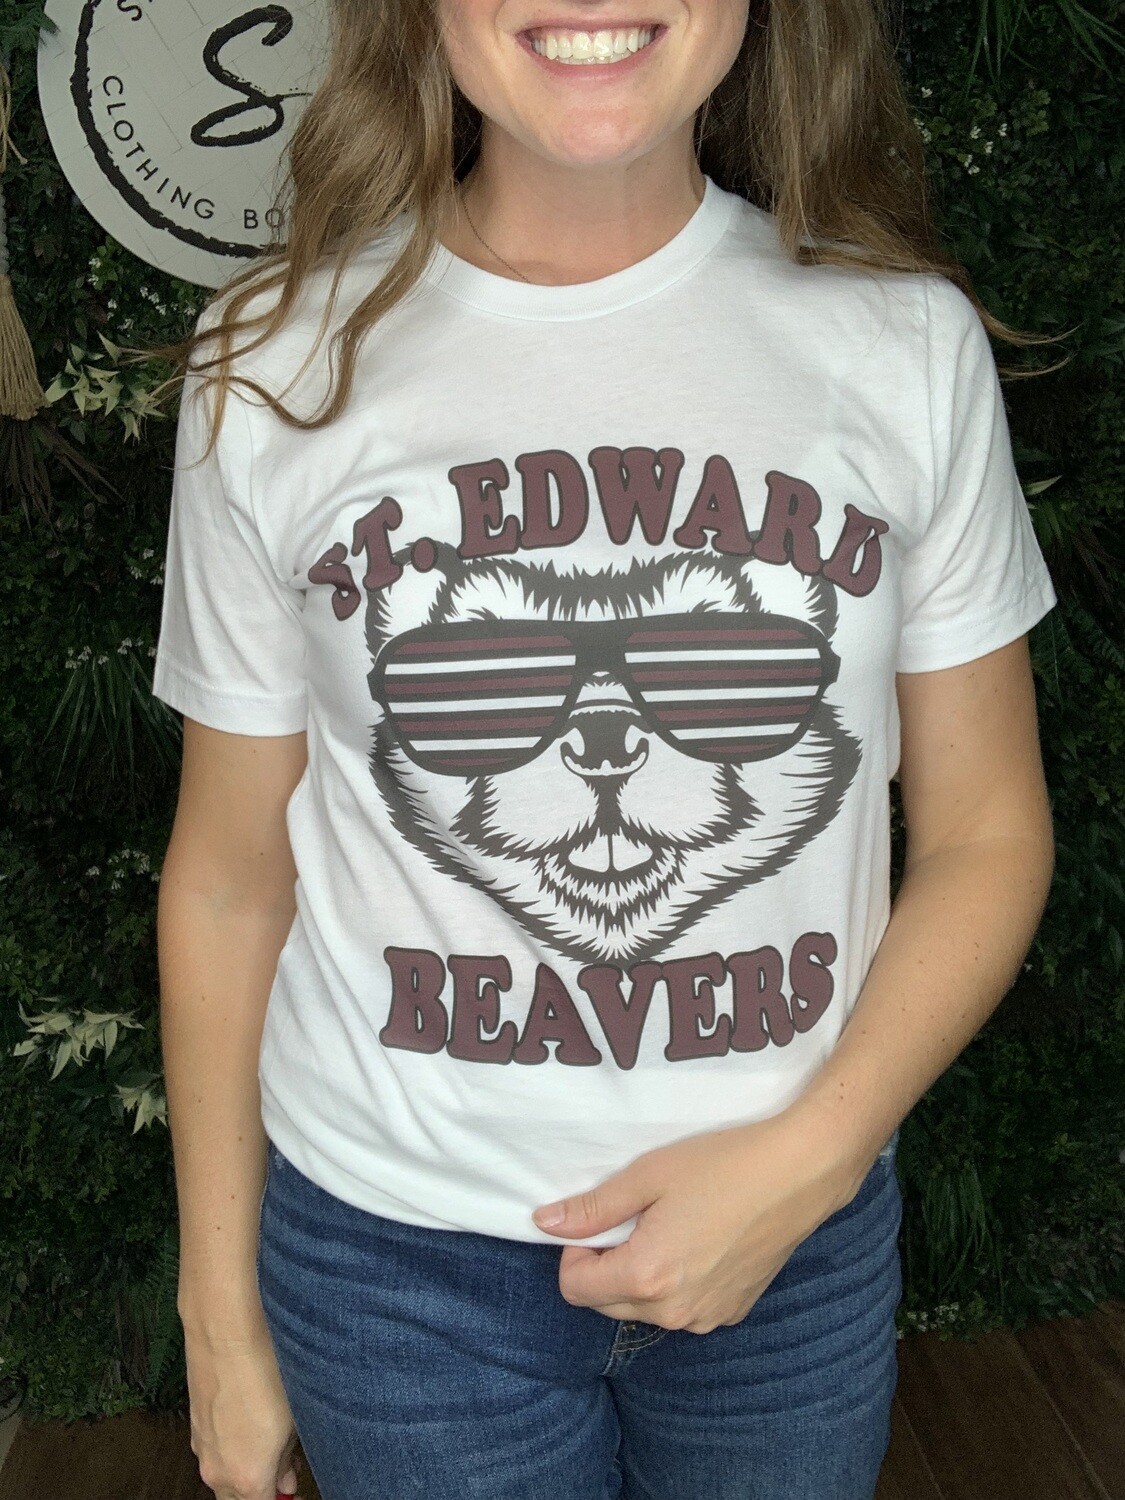 St. Edward Beavers Mascot Tee